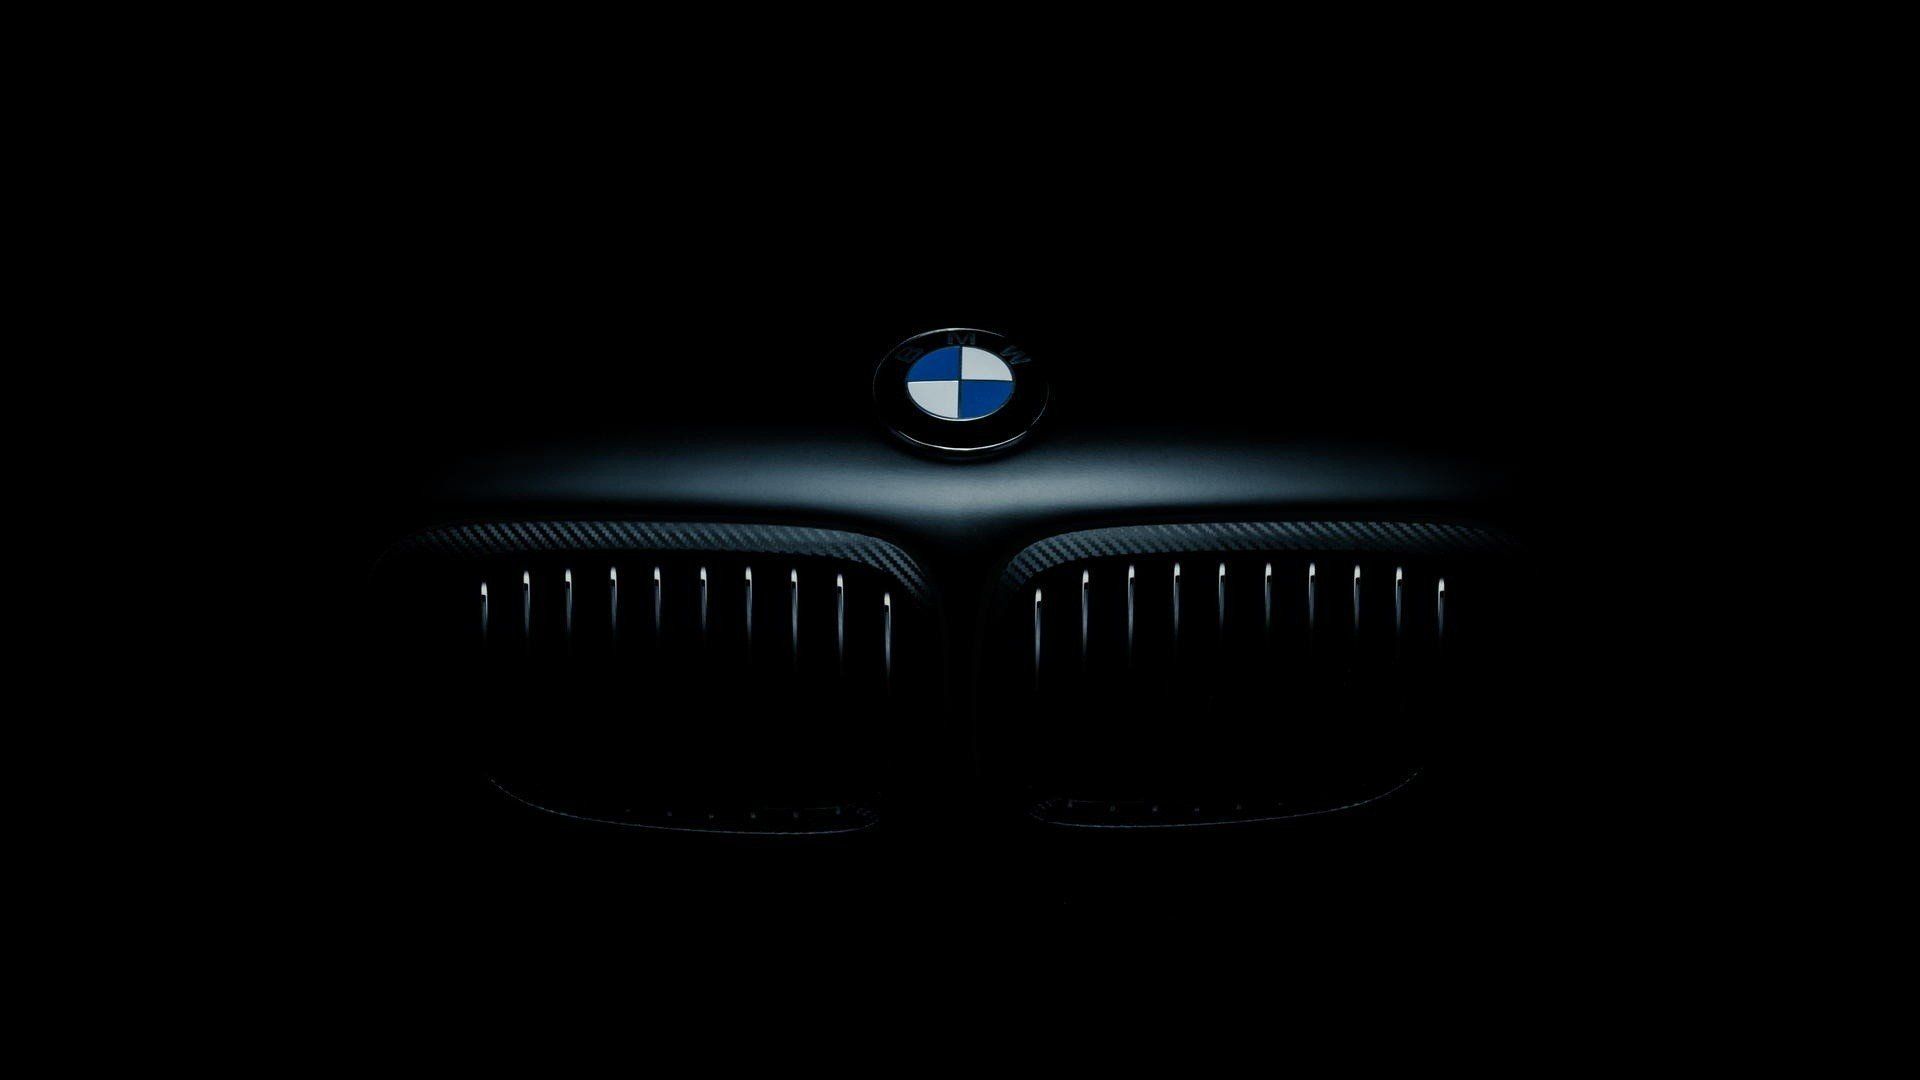  BMW Hintergrundbild 1920x1080. BMW Logo Wallpaper 1920x1080